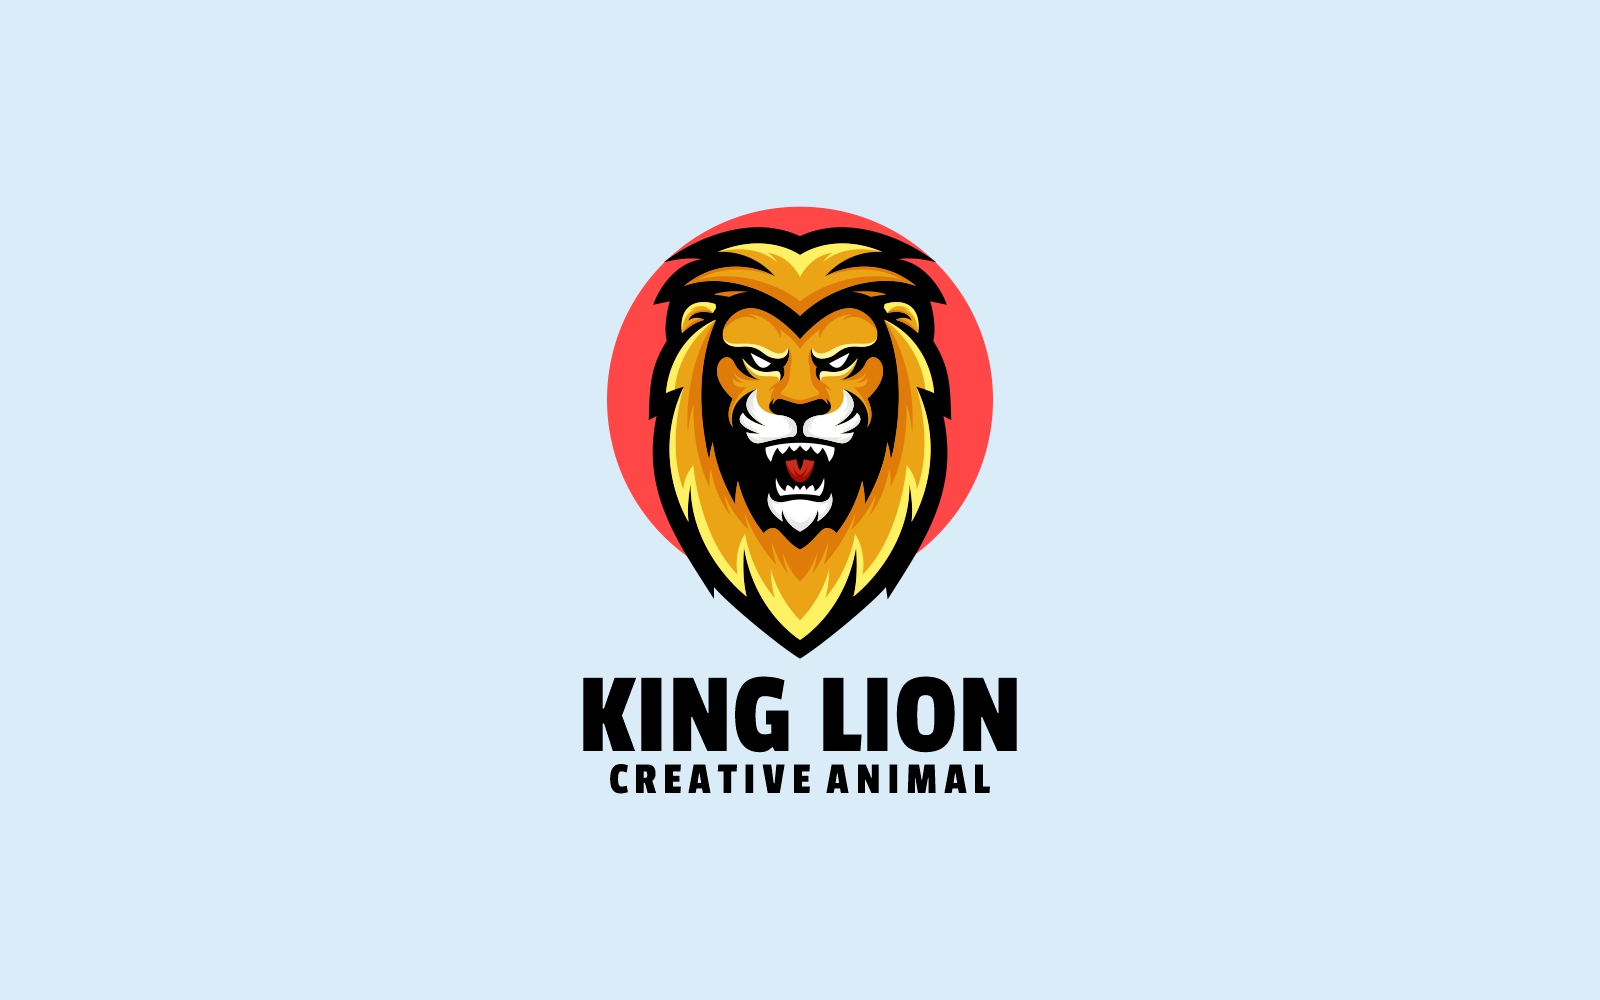 Lion King Simple Mascot Logo Style